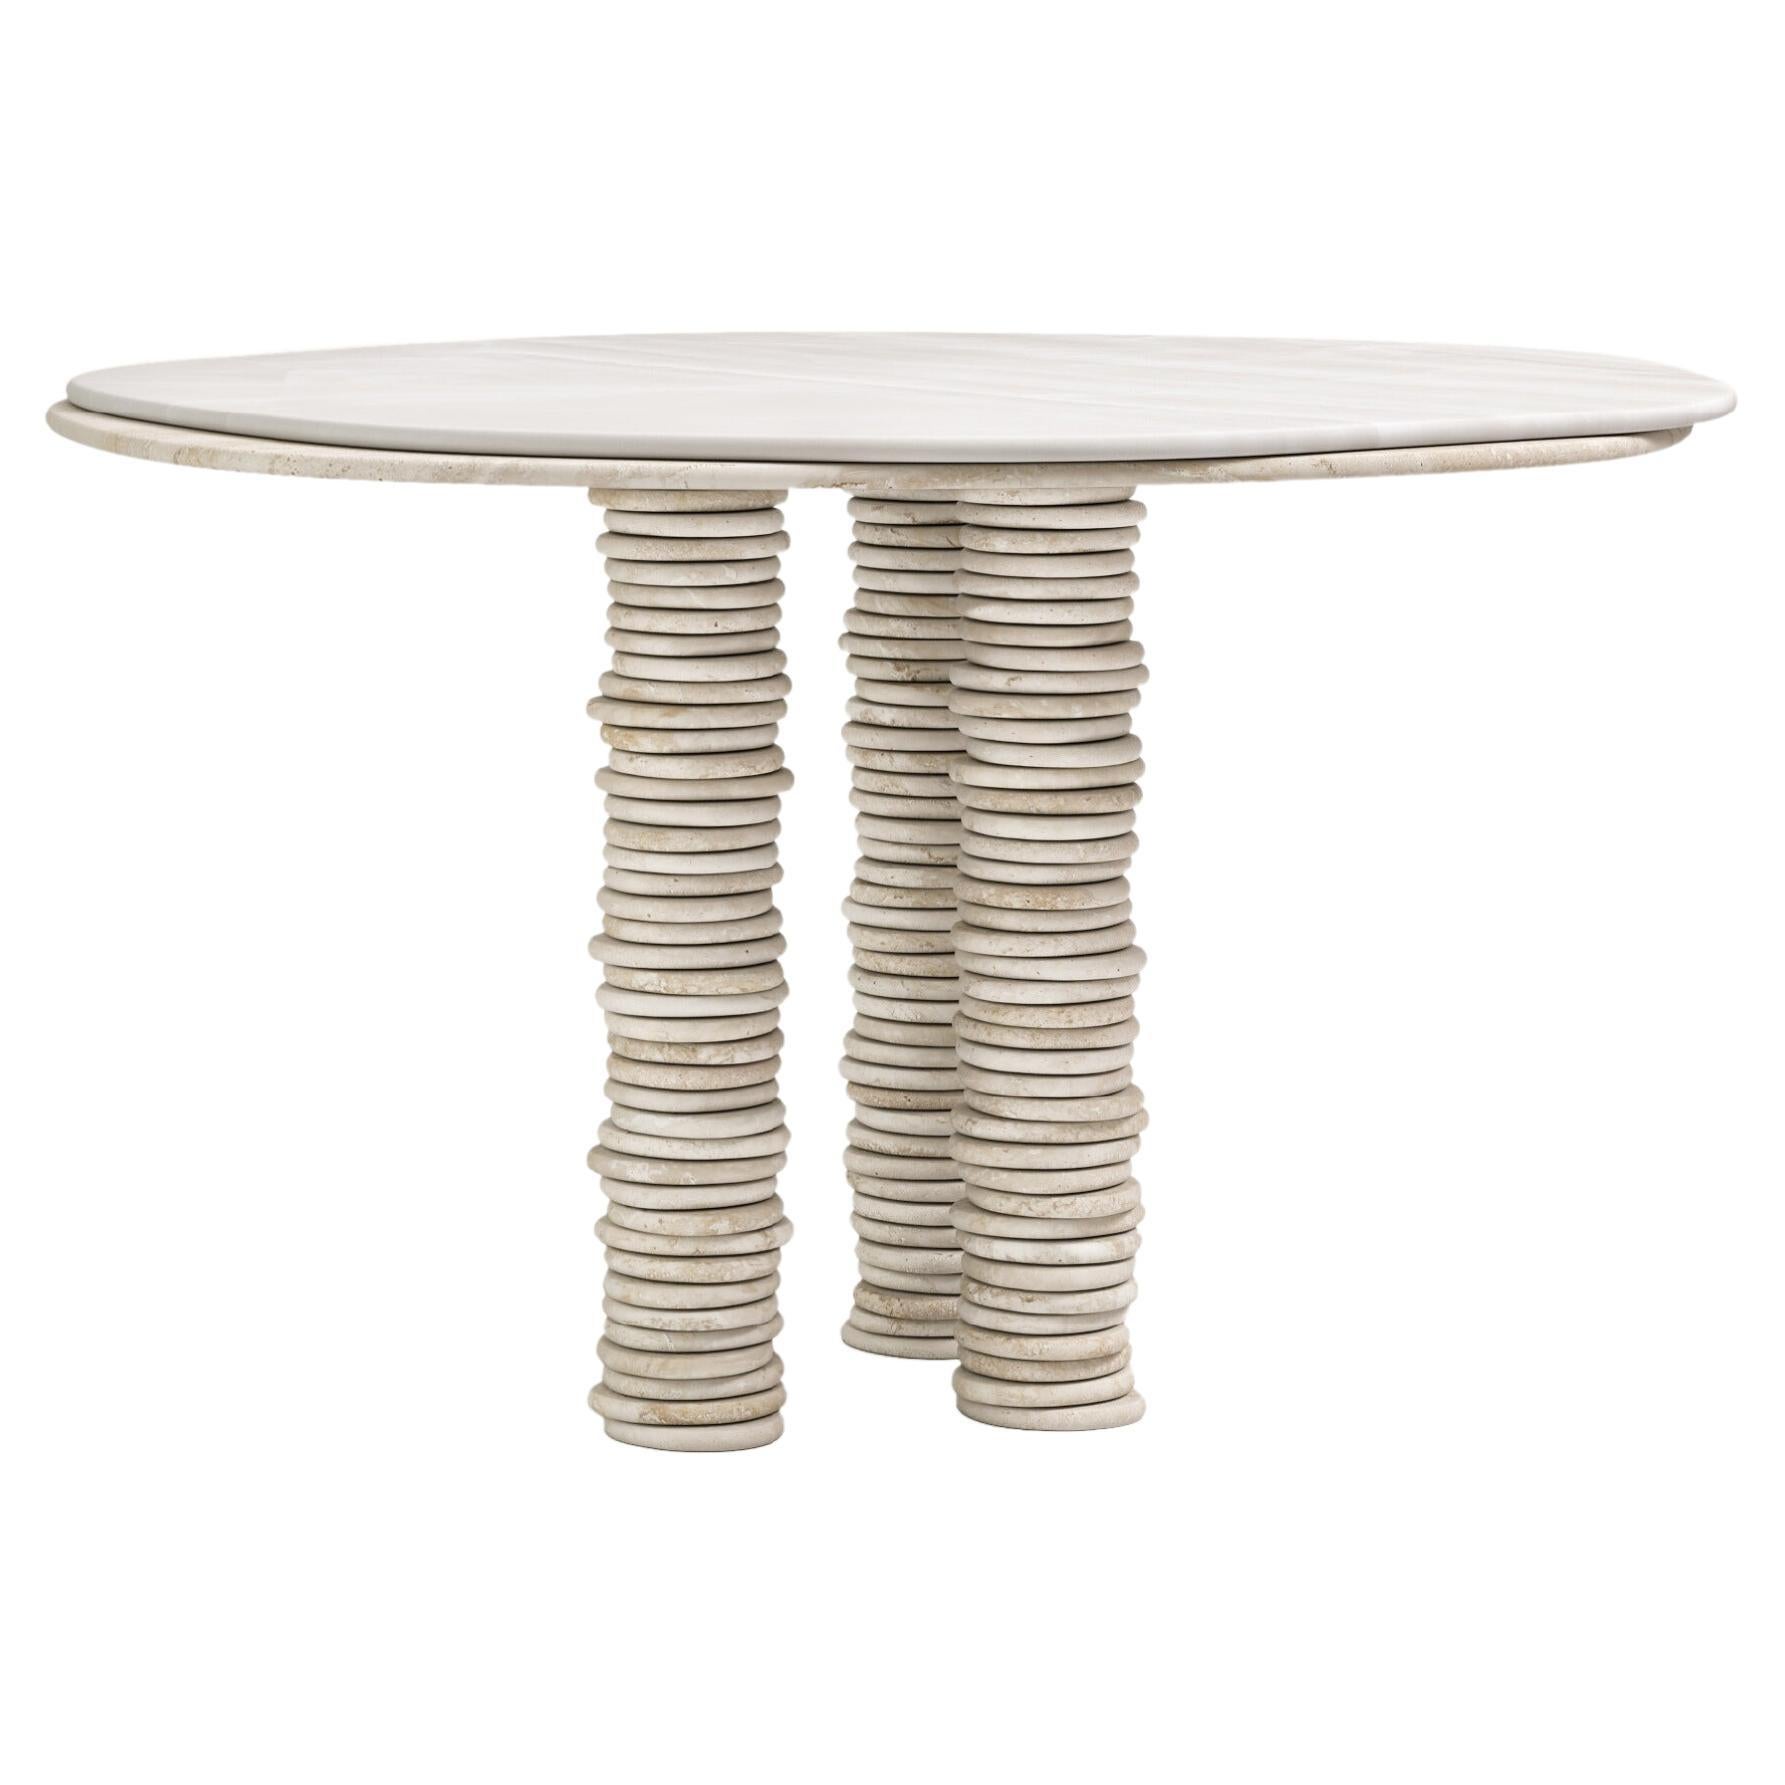 FORM(LA) Onda Round Dining Table 48”L x 48”W x 29”H Onyx & Travertino Navona VC For Sale